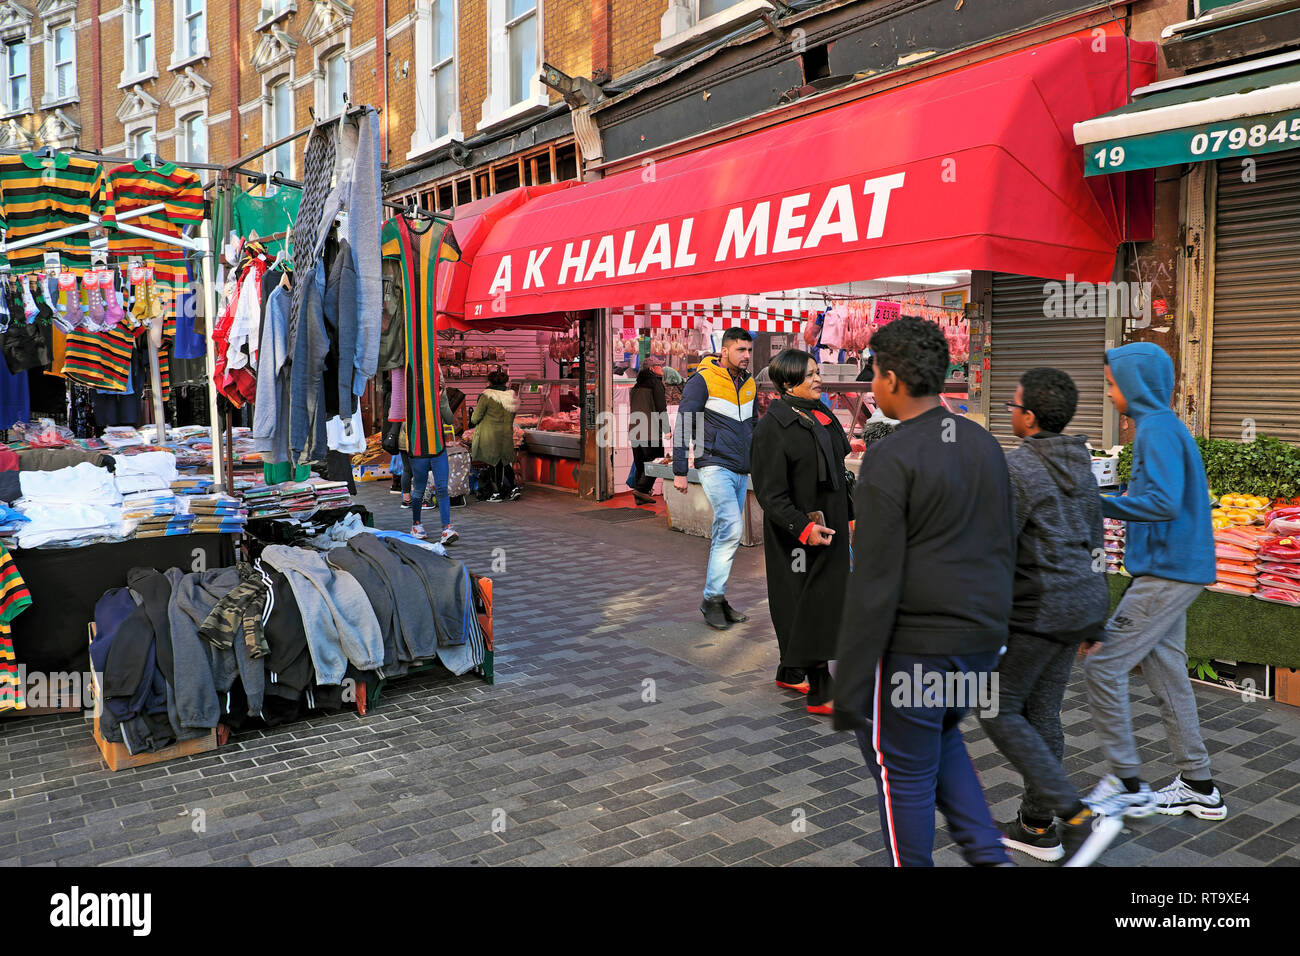 People walk past  AK Halal Meat butcher store & clothing stall, Brixton street market Electric Avenue Brixton South London SW9 England UK KATHY DEWITT Stock Photo